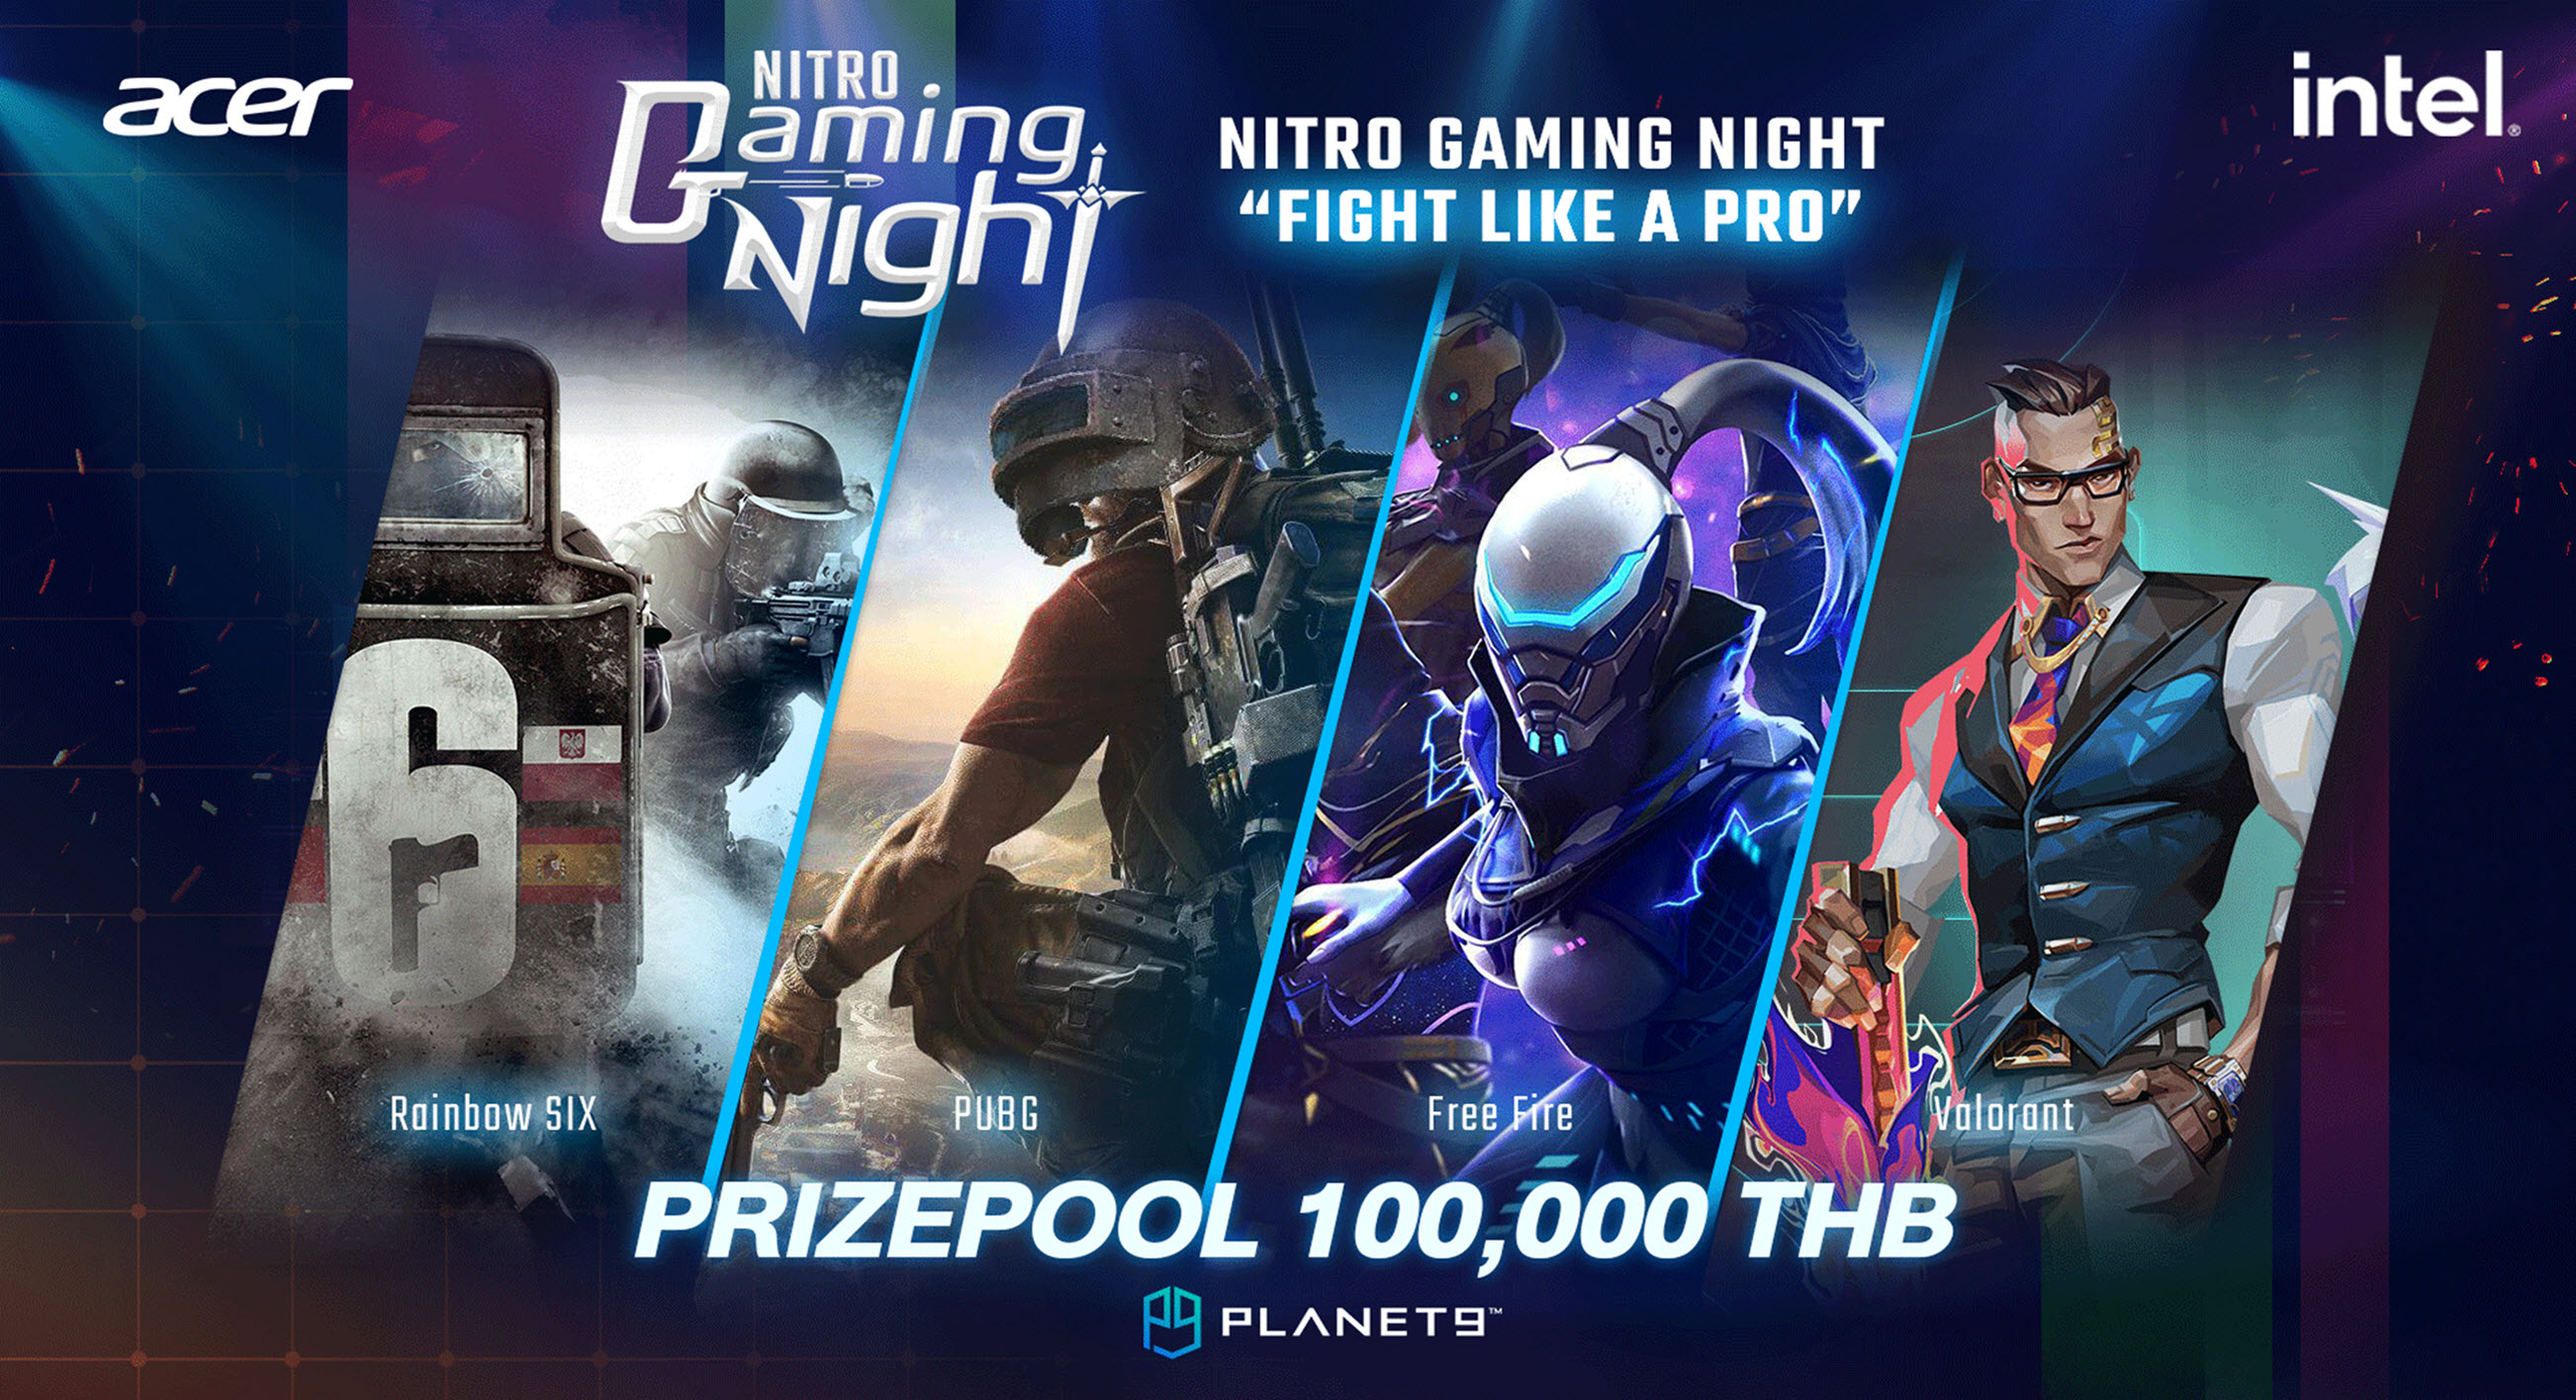 pic01 cover กลับมาอีกครั้งกับ Nitro Gaming Night 2022 Amateur Tournament ที่เปิดพื่นที่ให้ทีมมือใหม่ ที่อยากประลองผีมือได้มีพื้นทีสำหรับทดลองแข่งขัน Fight Like A Pro  สู้อย่างโปร สู้แบบมืออาชีพ!!